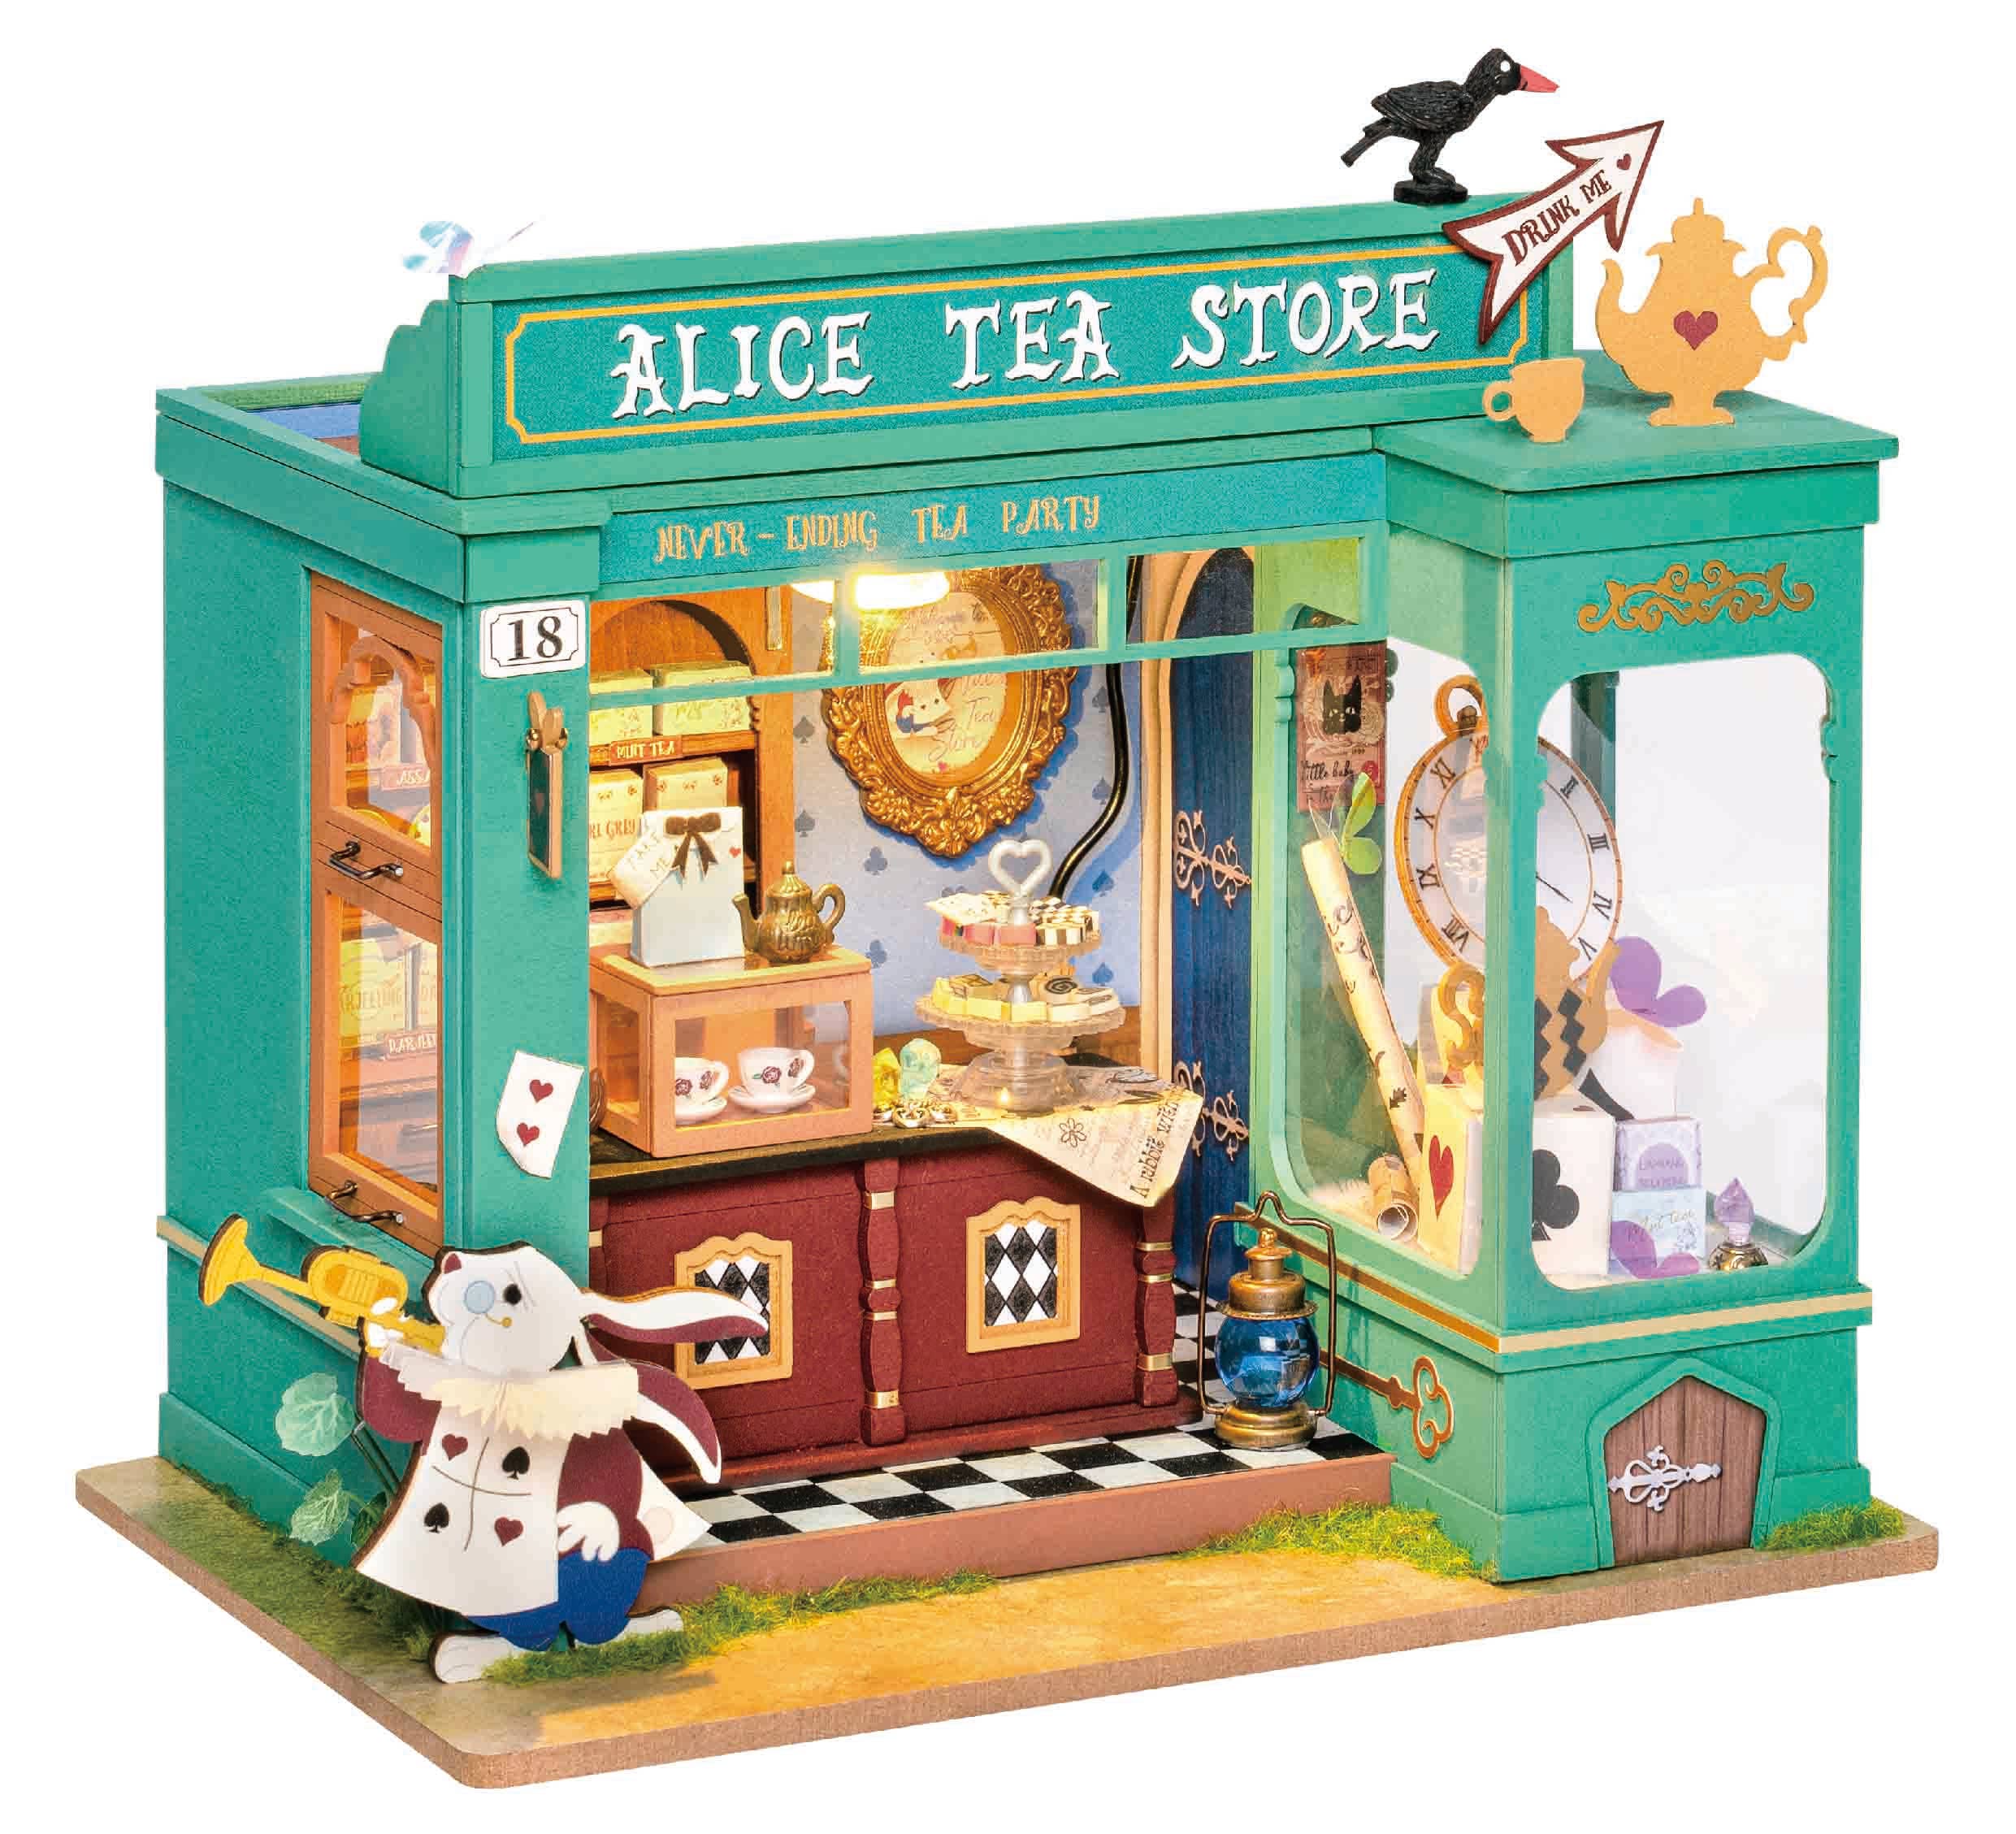 Alice's Tea Store Diorama Kit